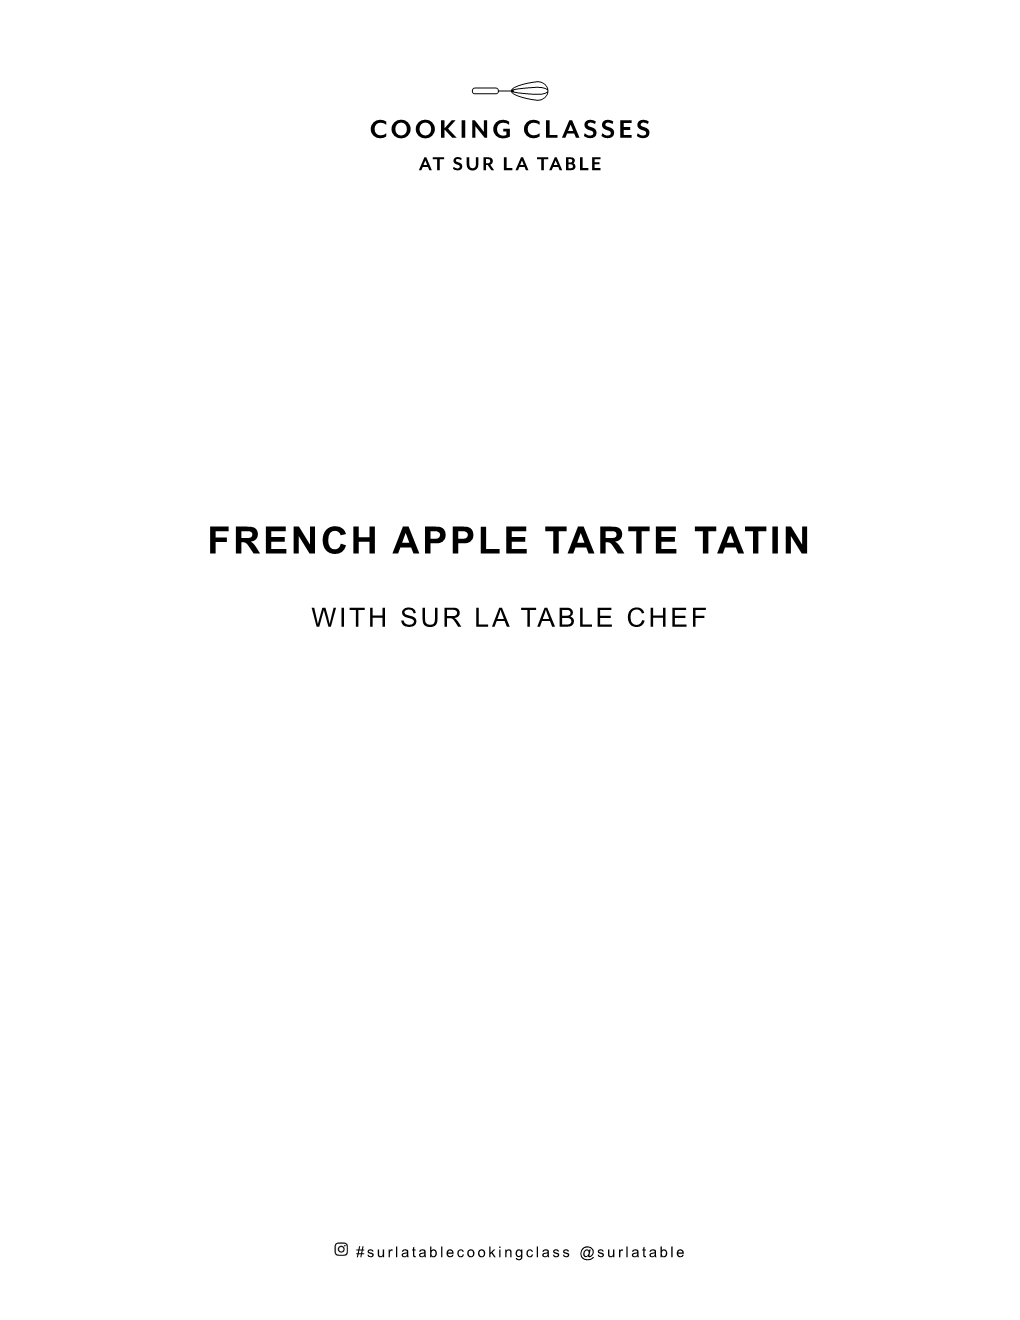 French Apple Tarte Tatin